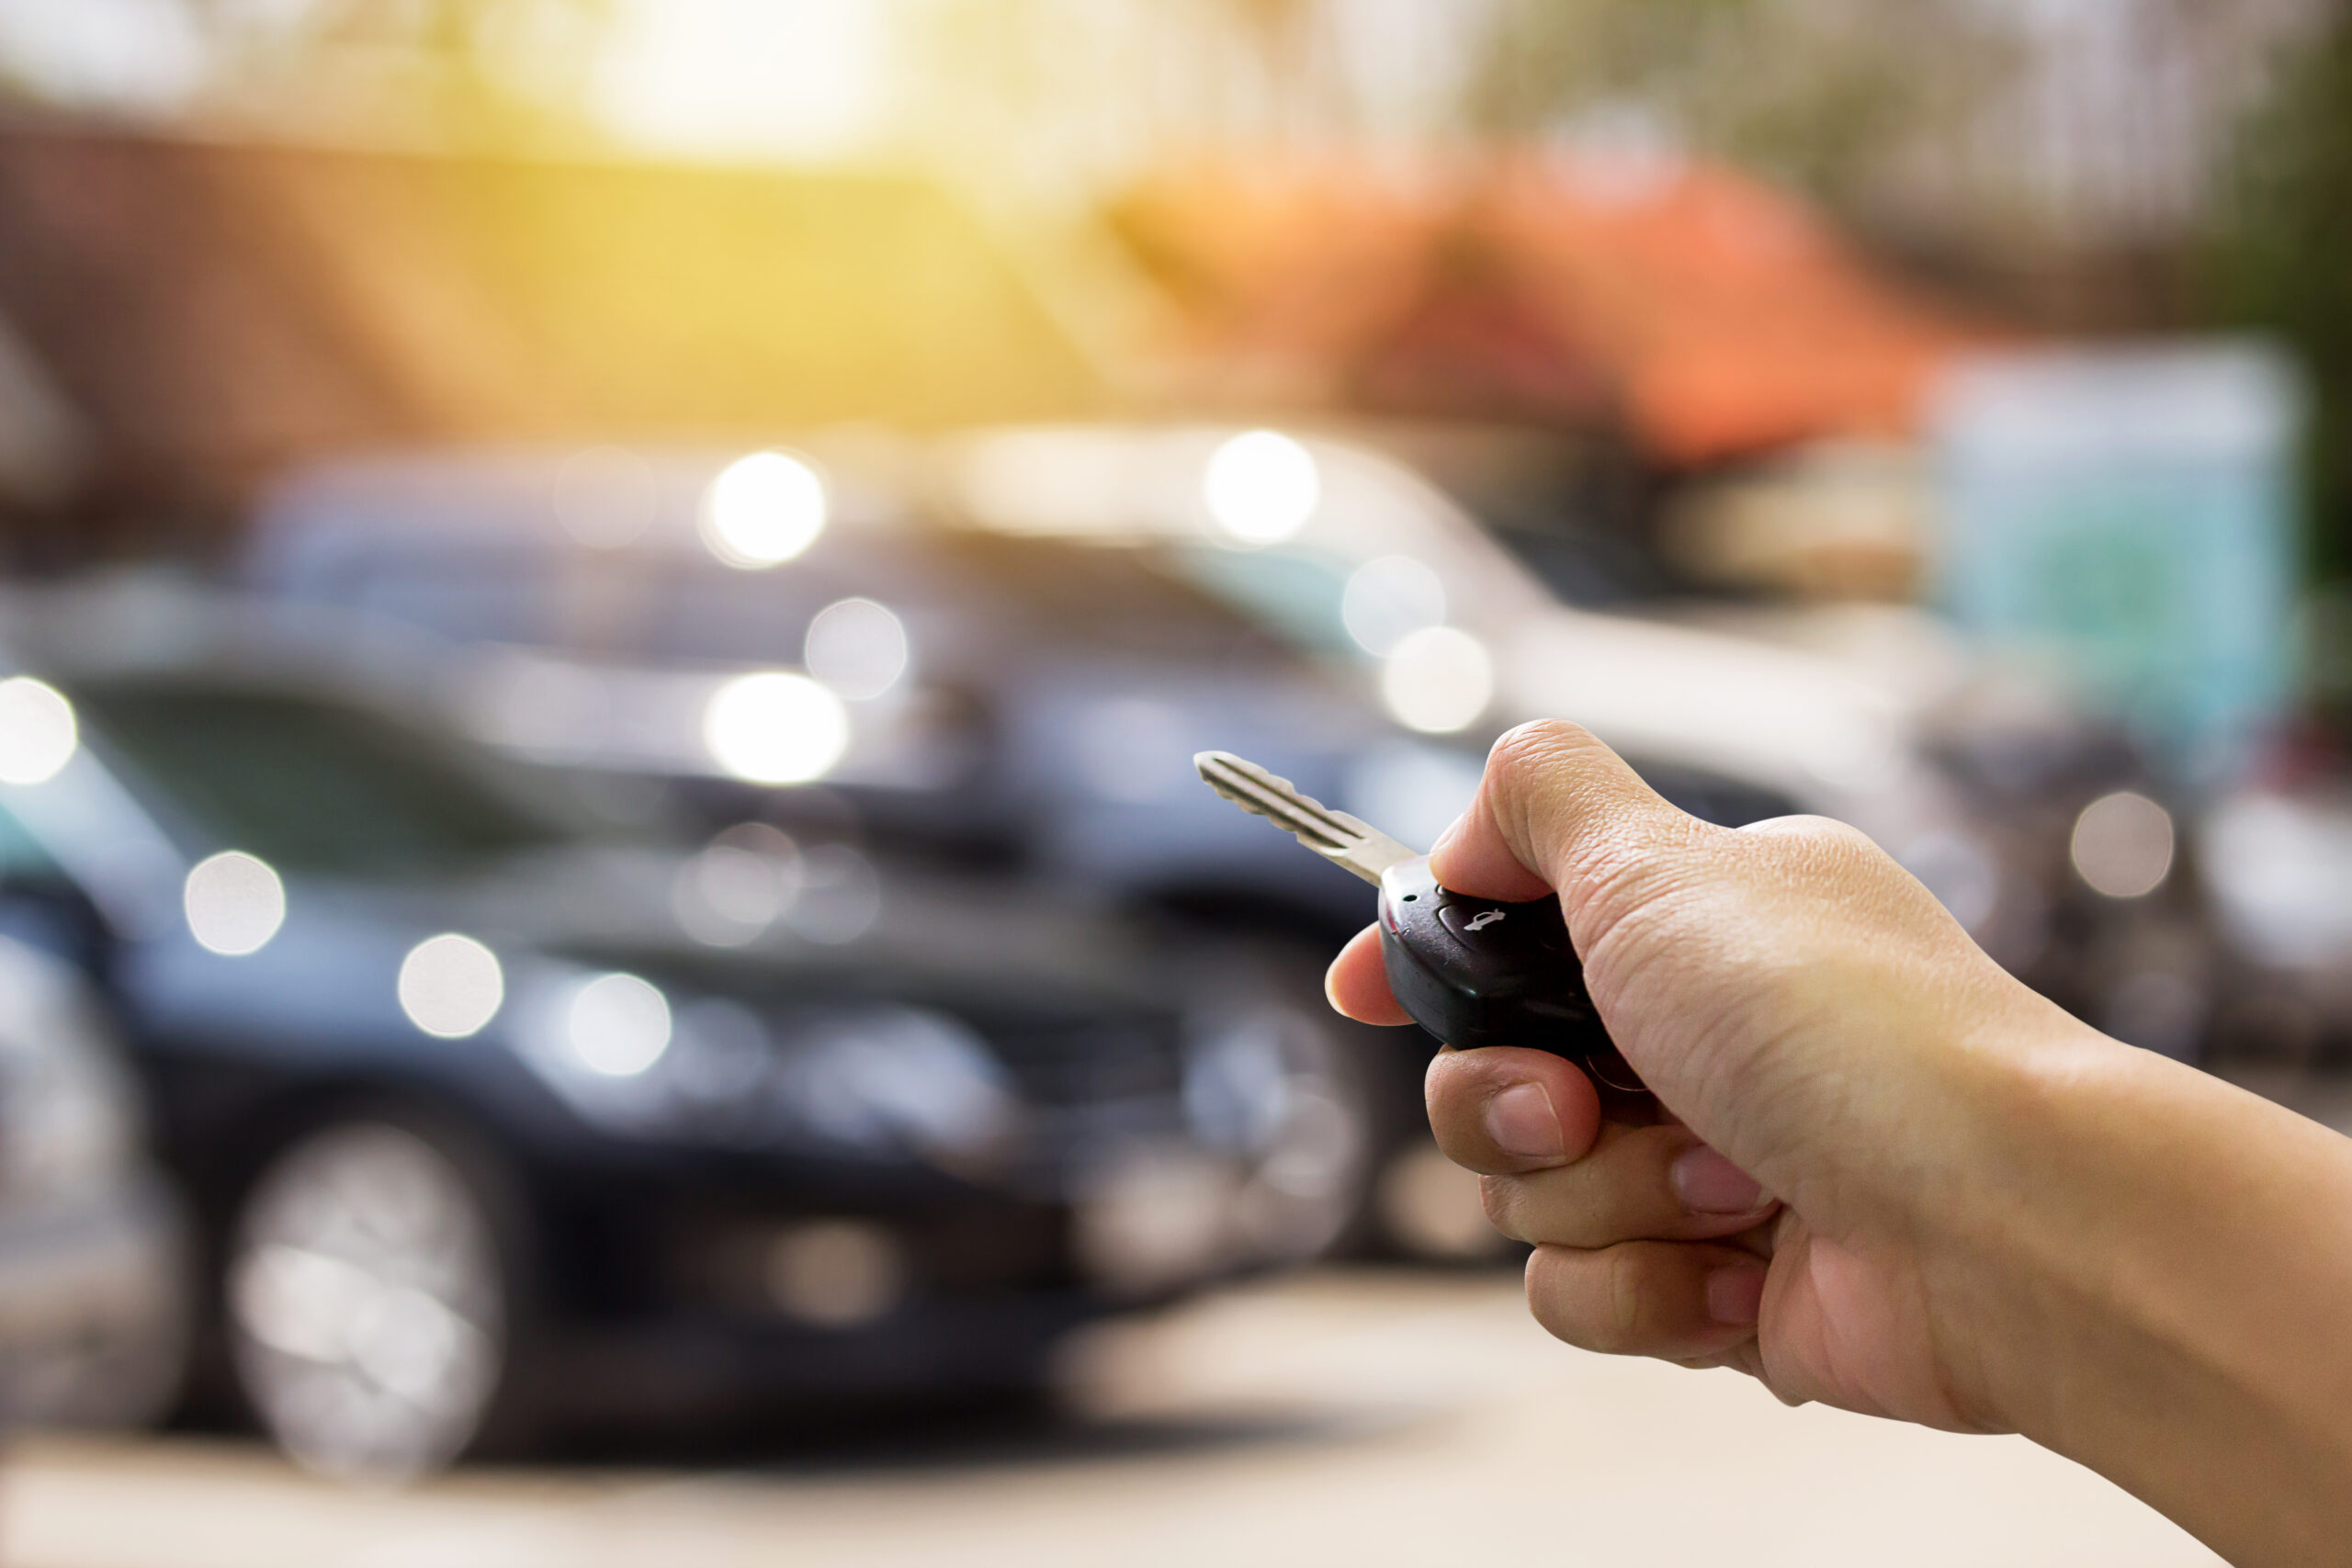 Auditing rental vehicles